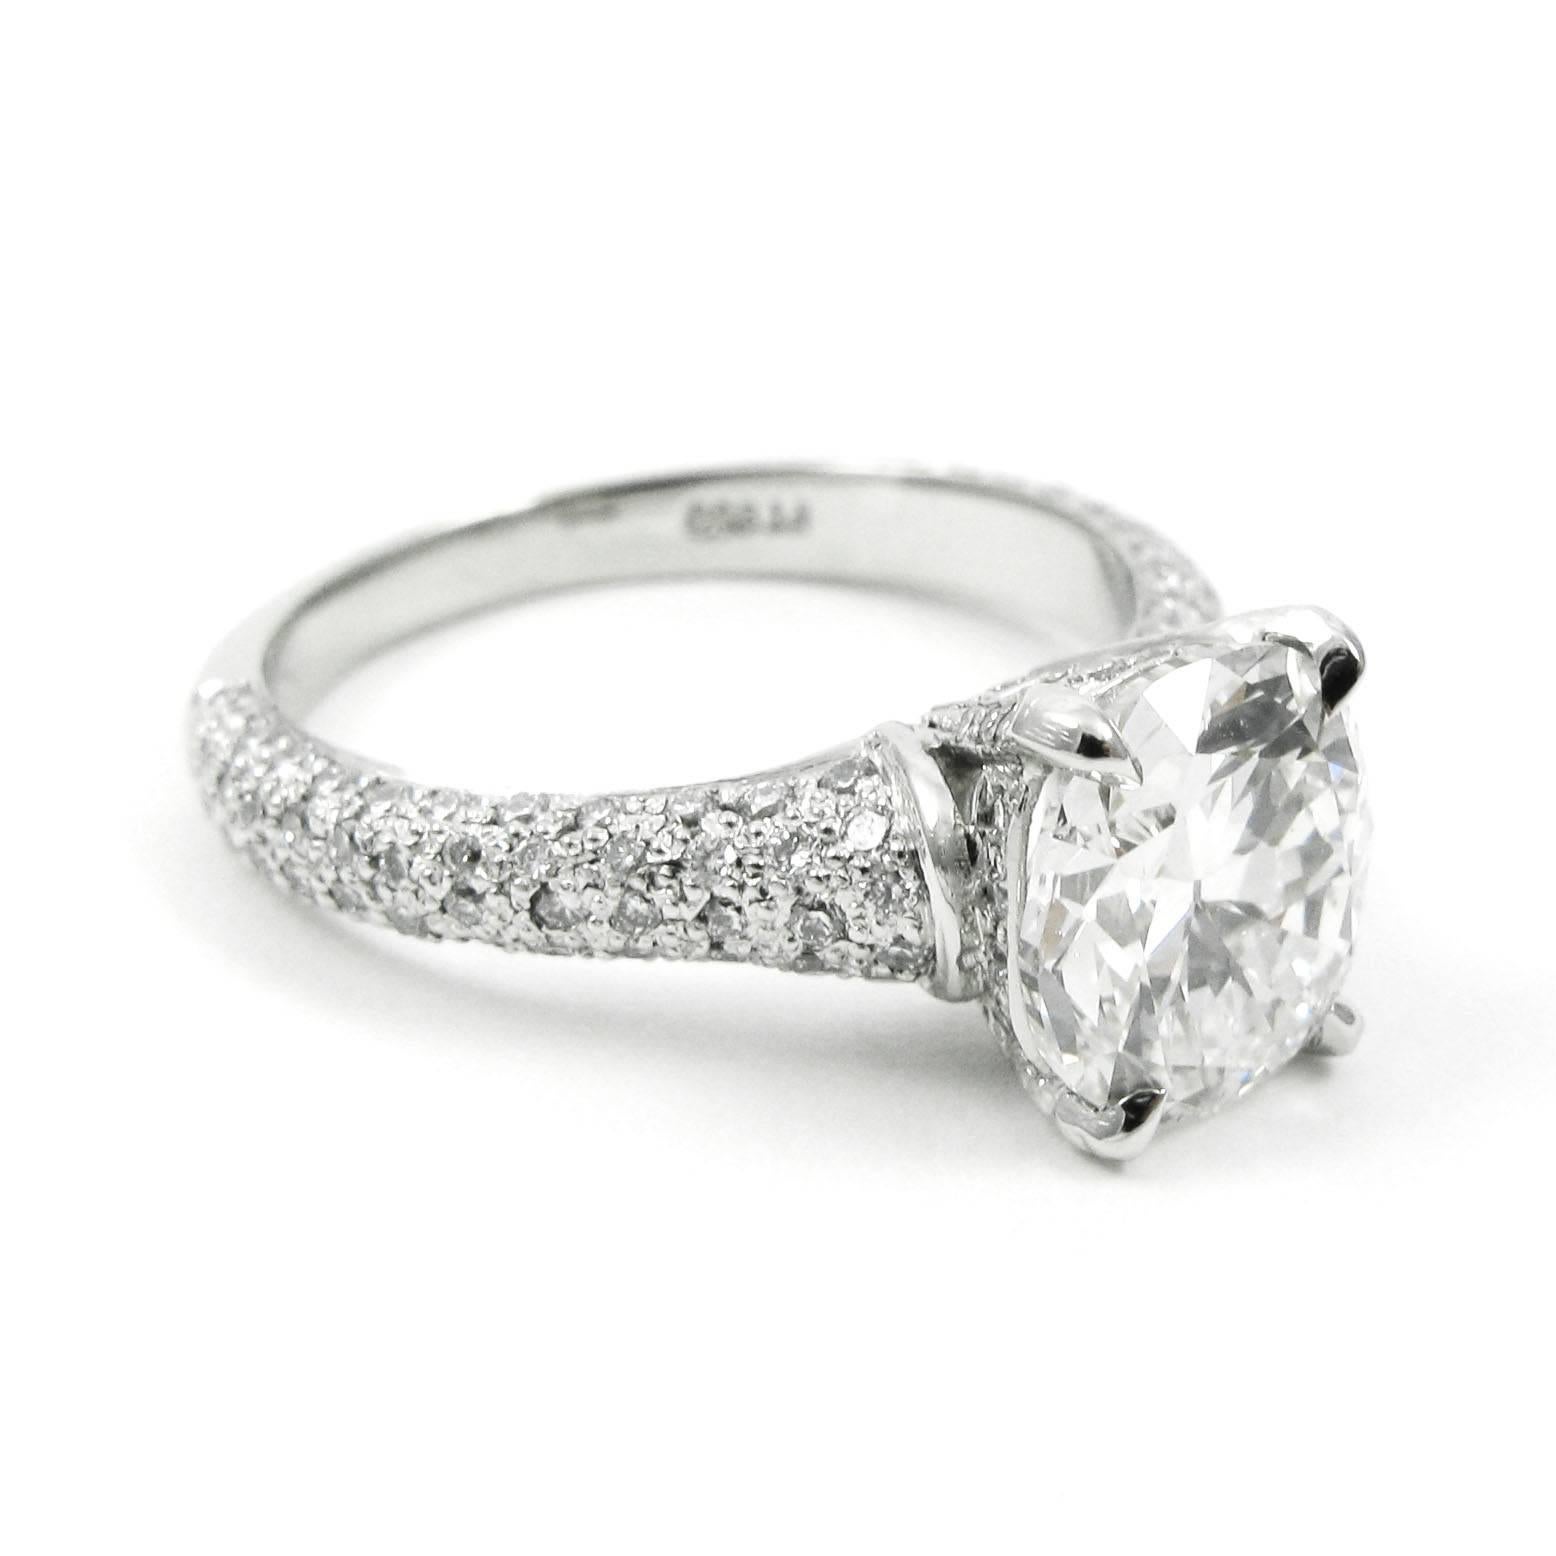 2.04 carat diamond ring